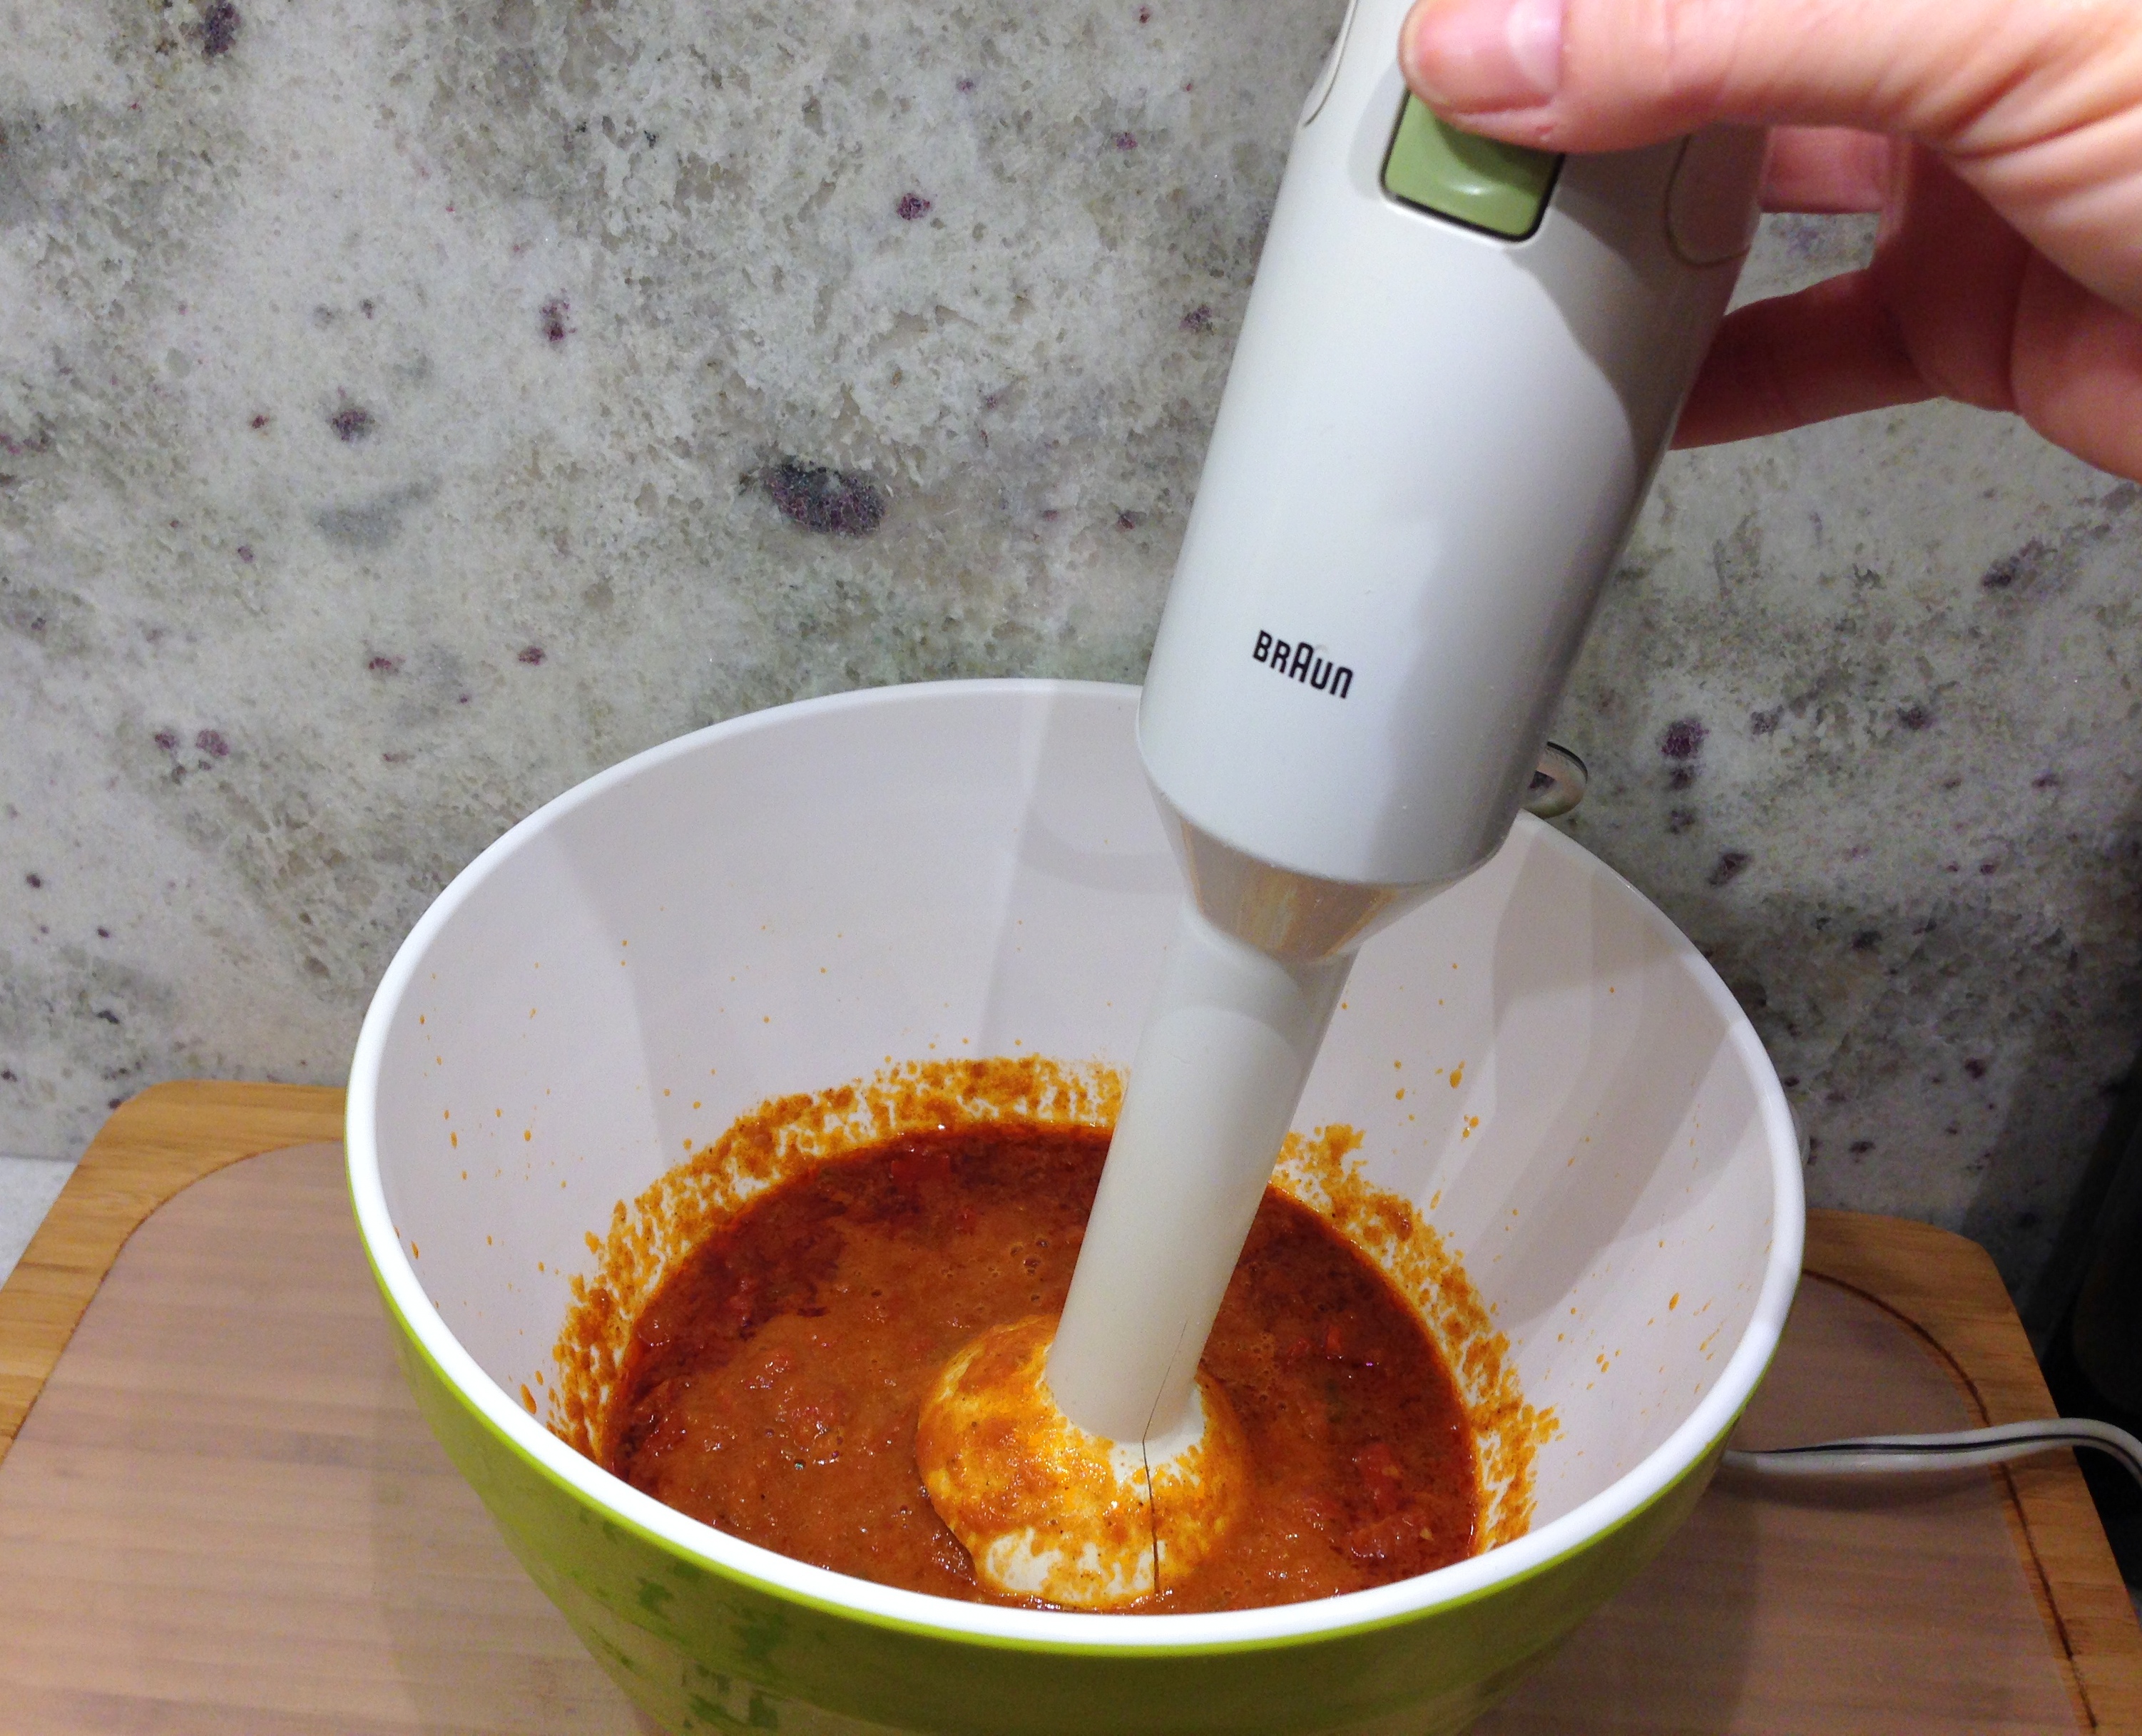 Blend sauce with immersion blender